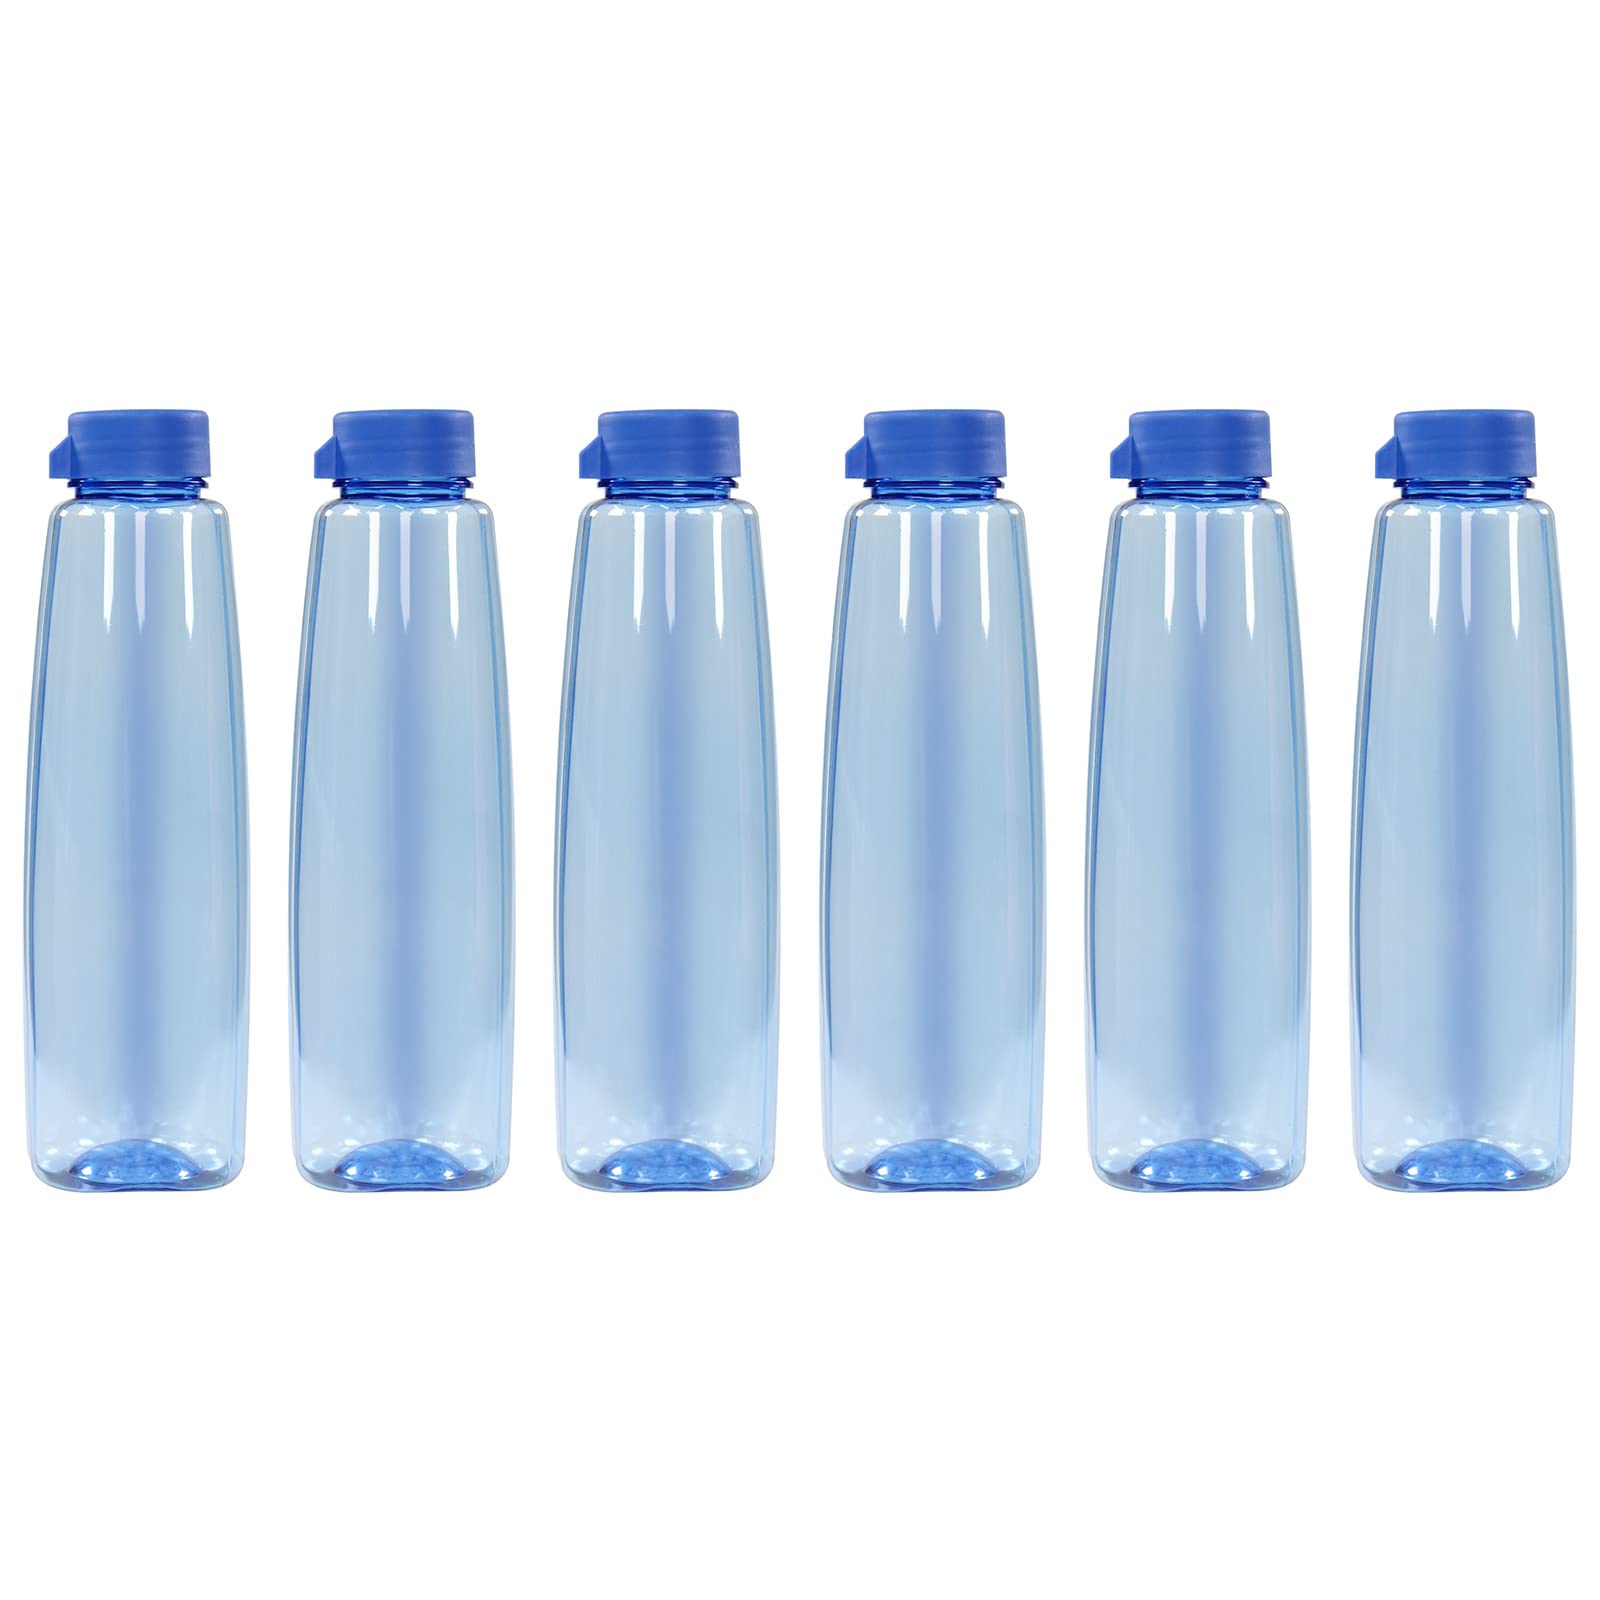 PEARLPET Kohinoor BPA-free Plastic Water Bottle Set of 6 Pcs, Each 1000ml, Blue